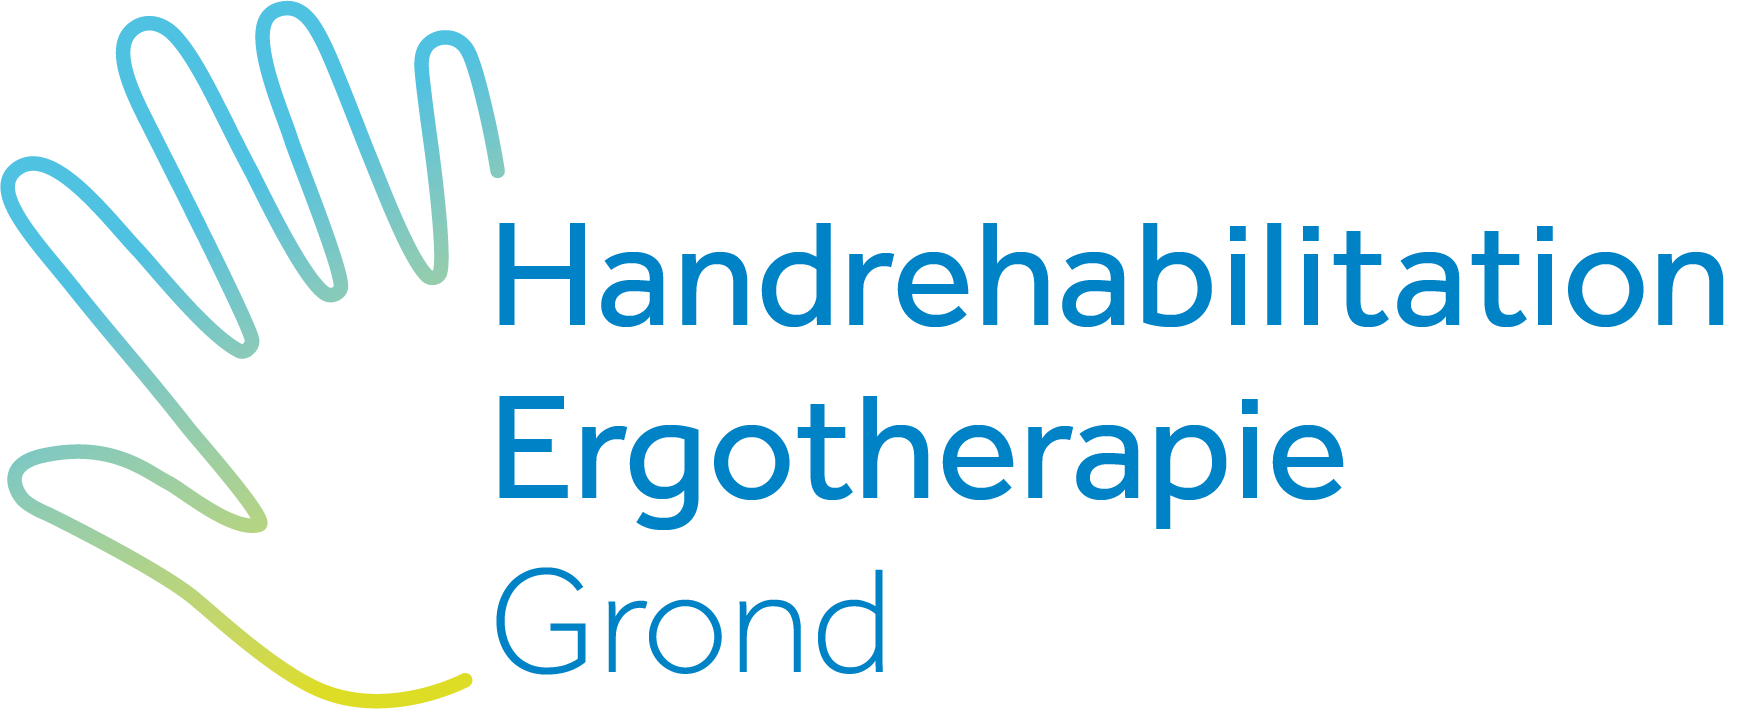 Handrehabilitation & Ergotherapie Grond